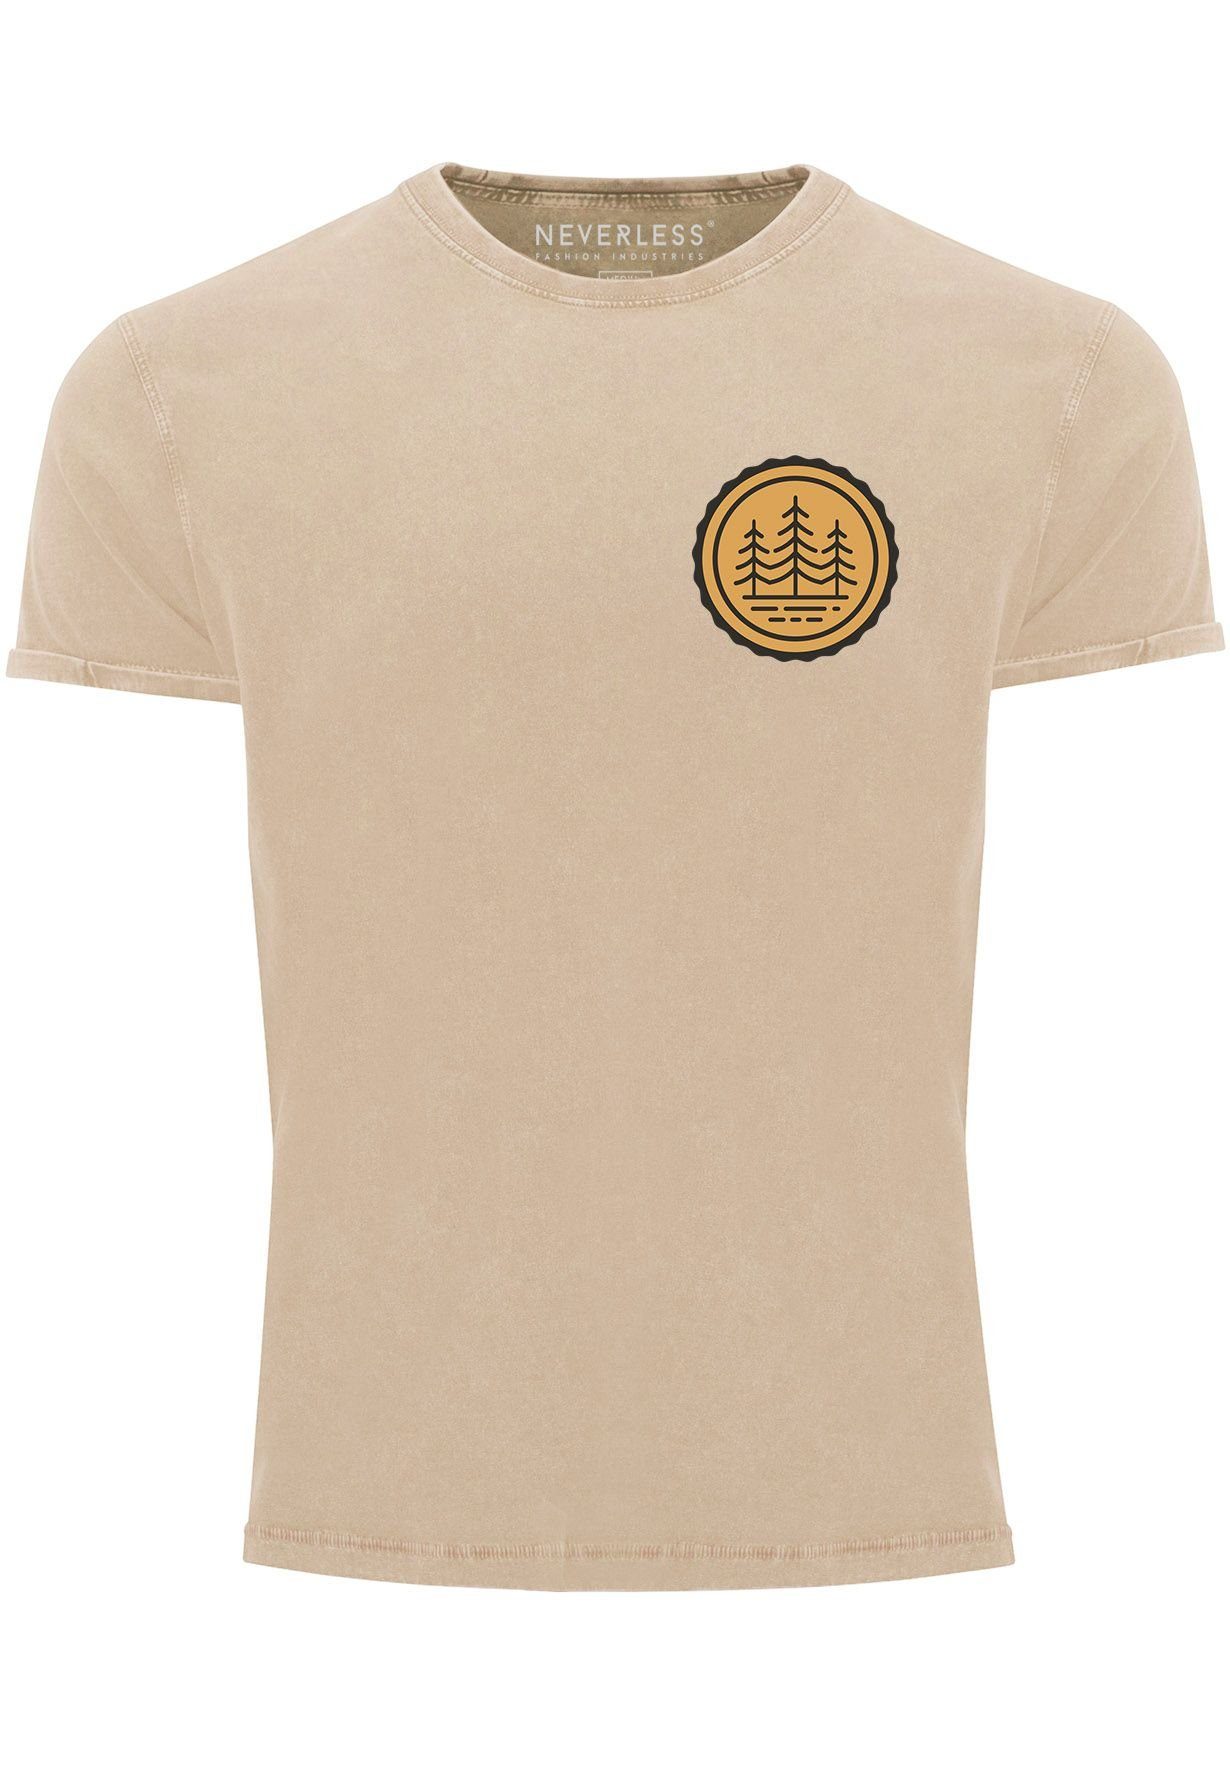 Badge Naturliebhaber Herren Outdoor Bäume Fash Wald Logo mit Print-Shirt Shirt Vintage Neverless Print